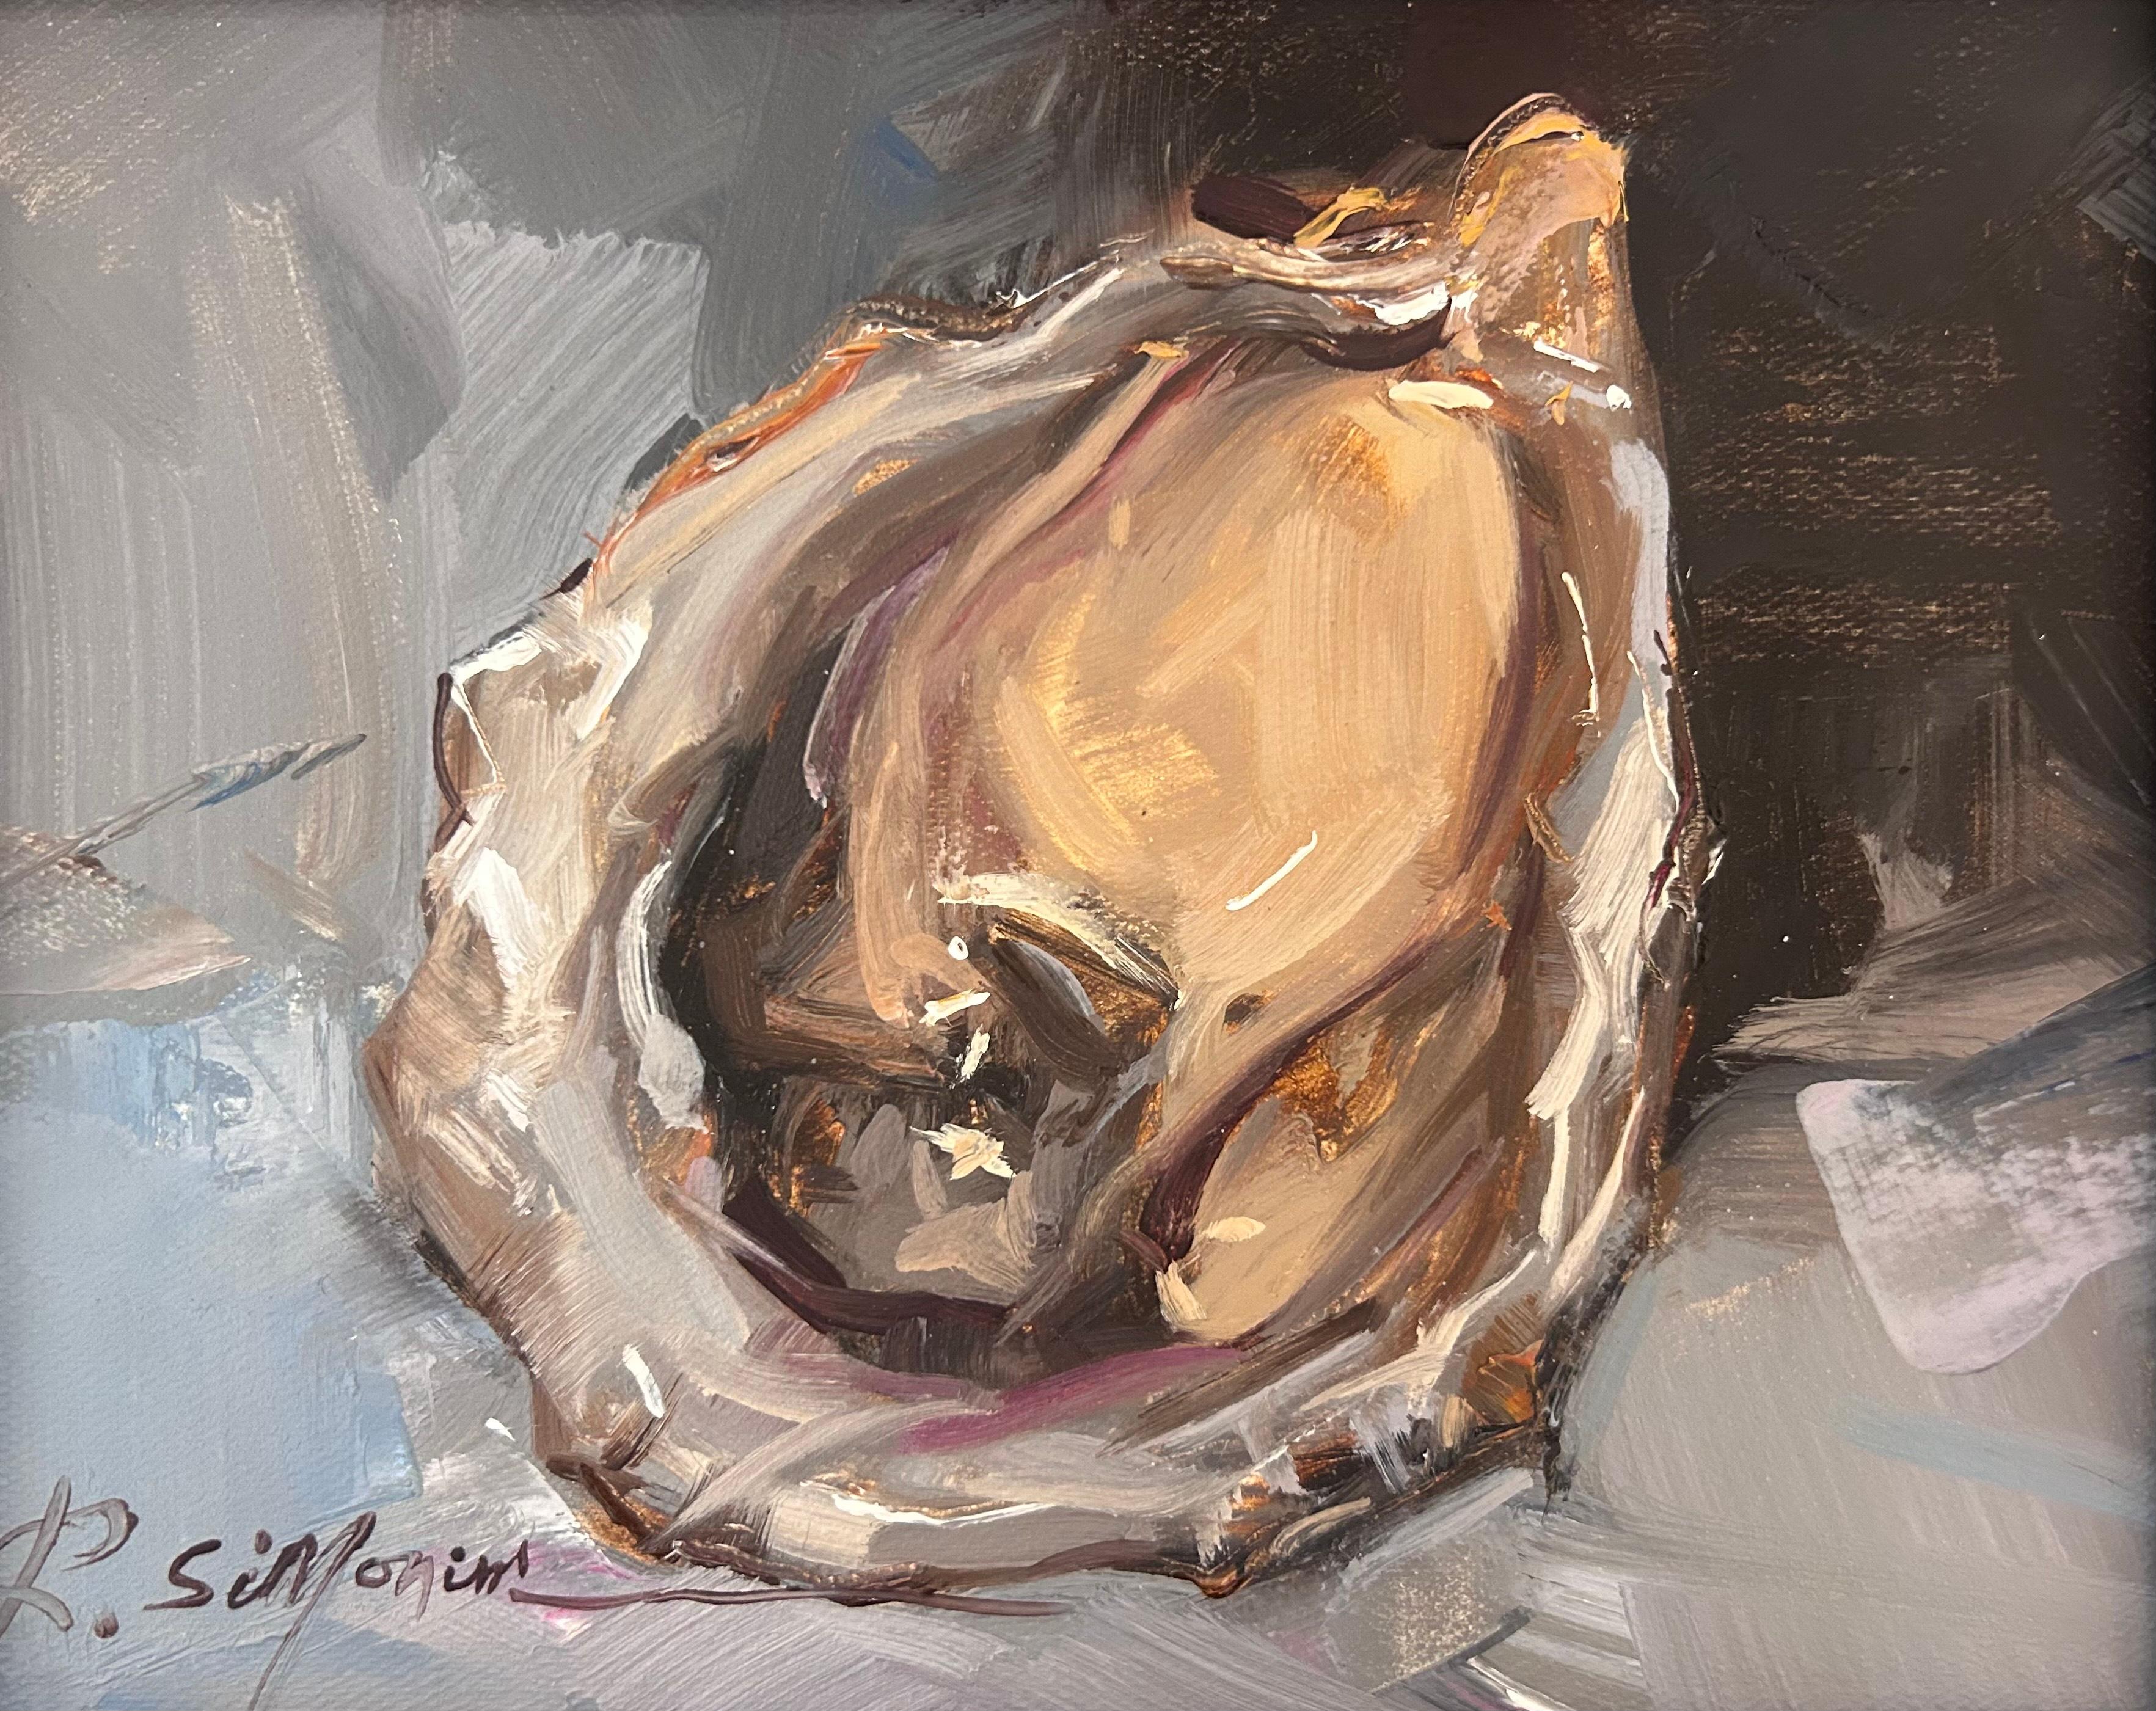 Ray Simonini "Shucked" 8x10 Austernschale Impressionist Ölgemälde auf Leinwand